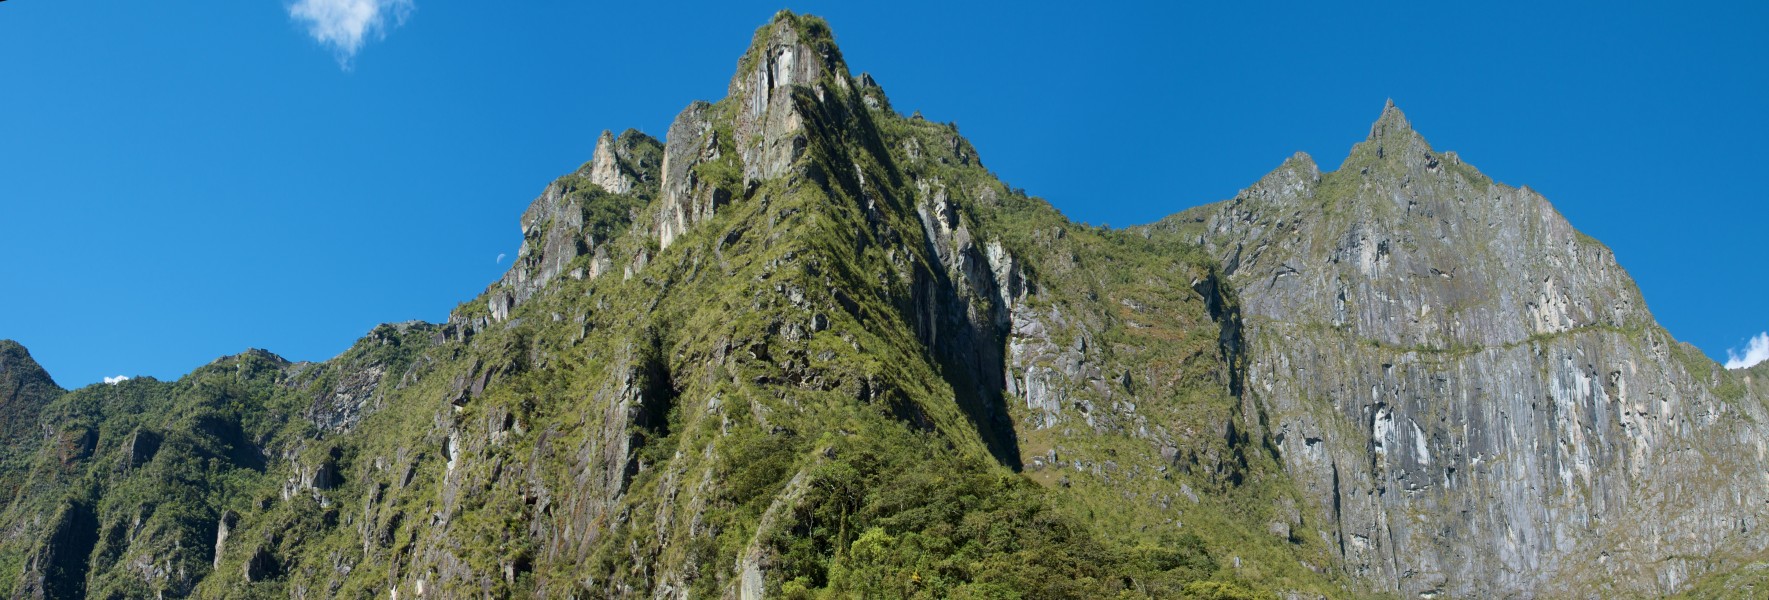 Peru - Salkantay Trek 154 - looking up the cliffs at Machu Picchu (7158991293)